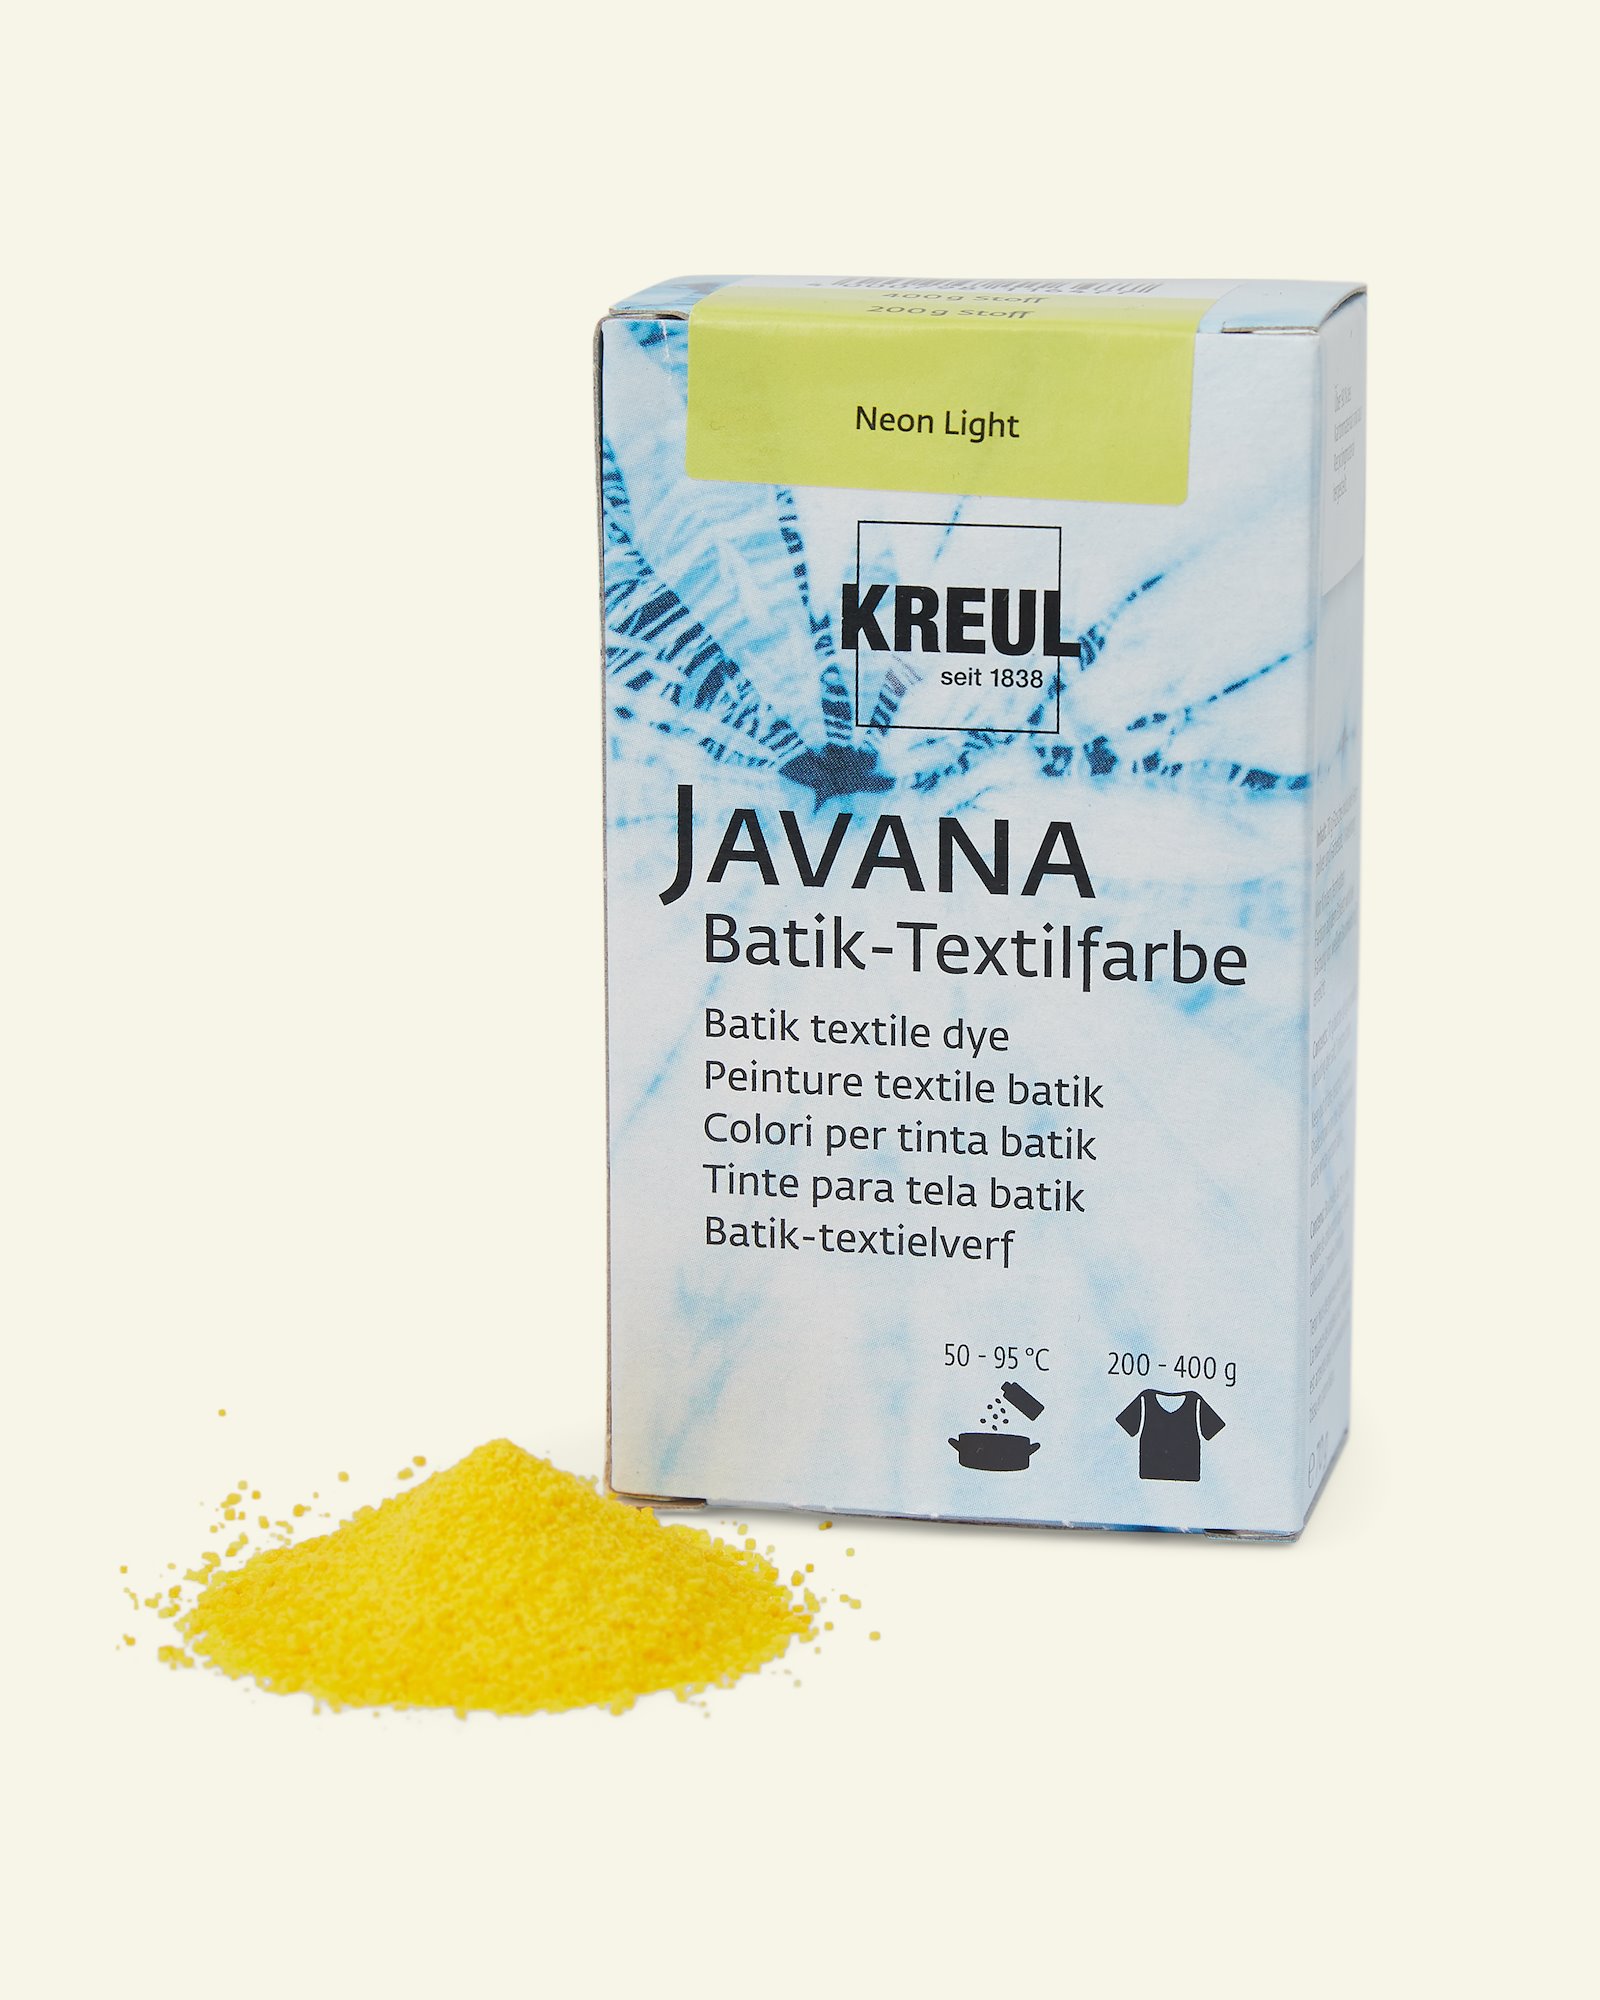 Javana batikkfarge, lys gul, 70g 29656_pack